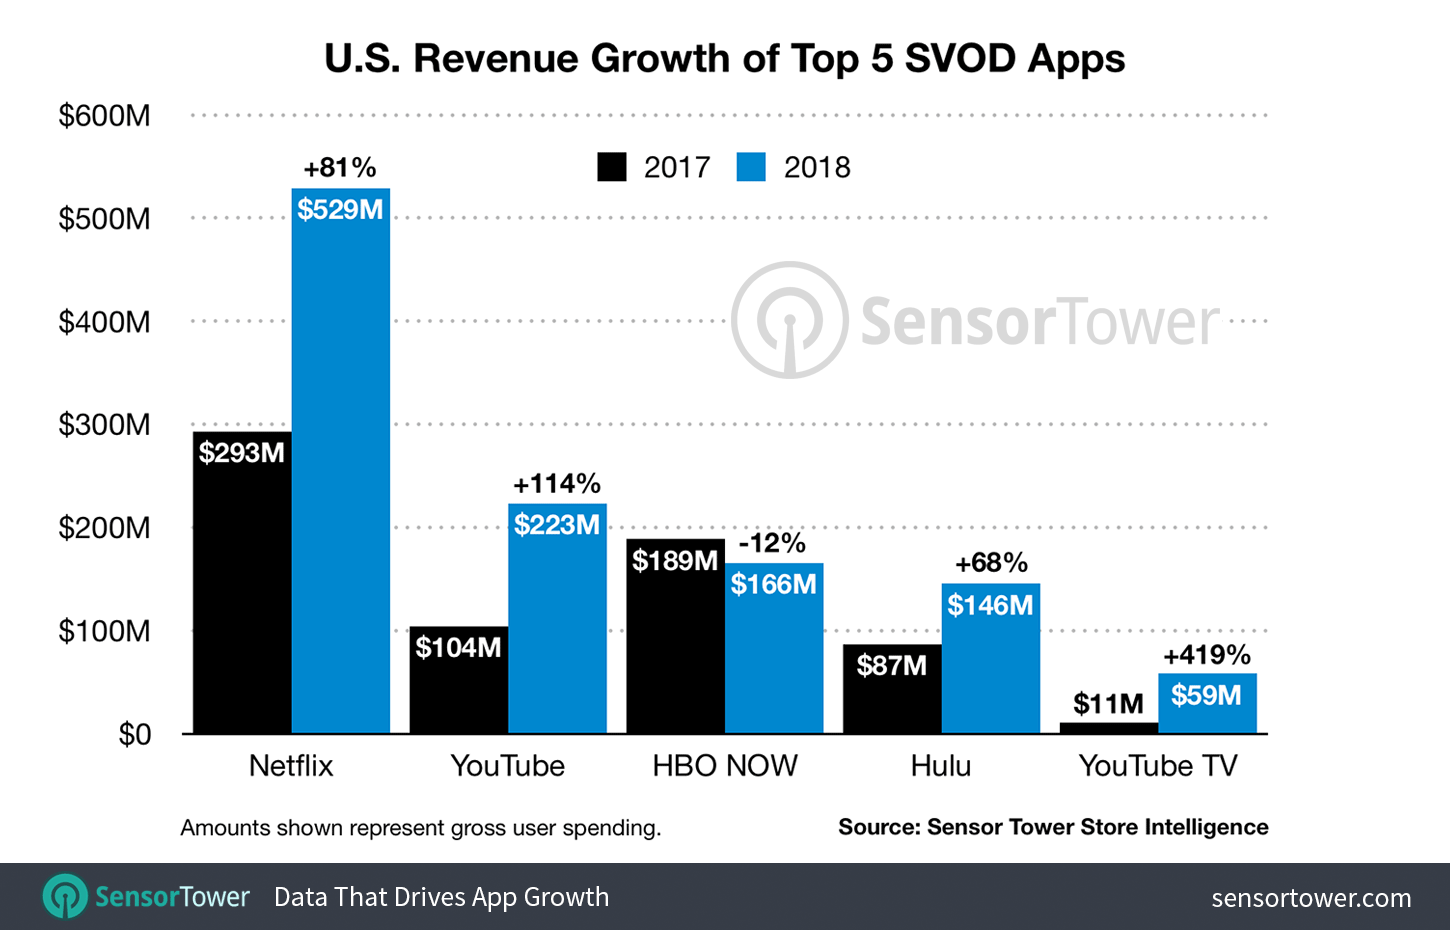 Revenue Growth of Top Five U.S. SVOD Apps Between 2017 and 2018